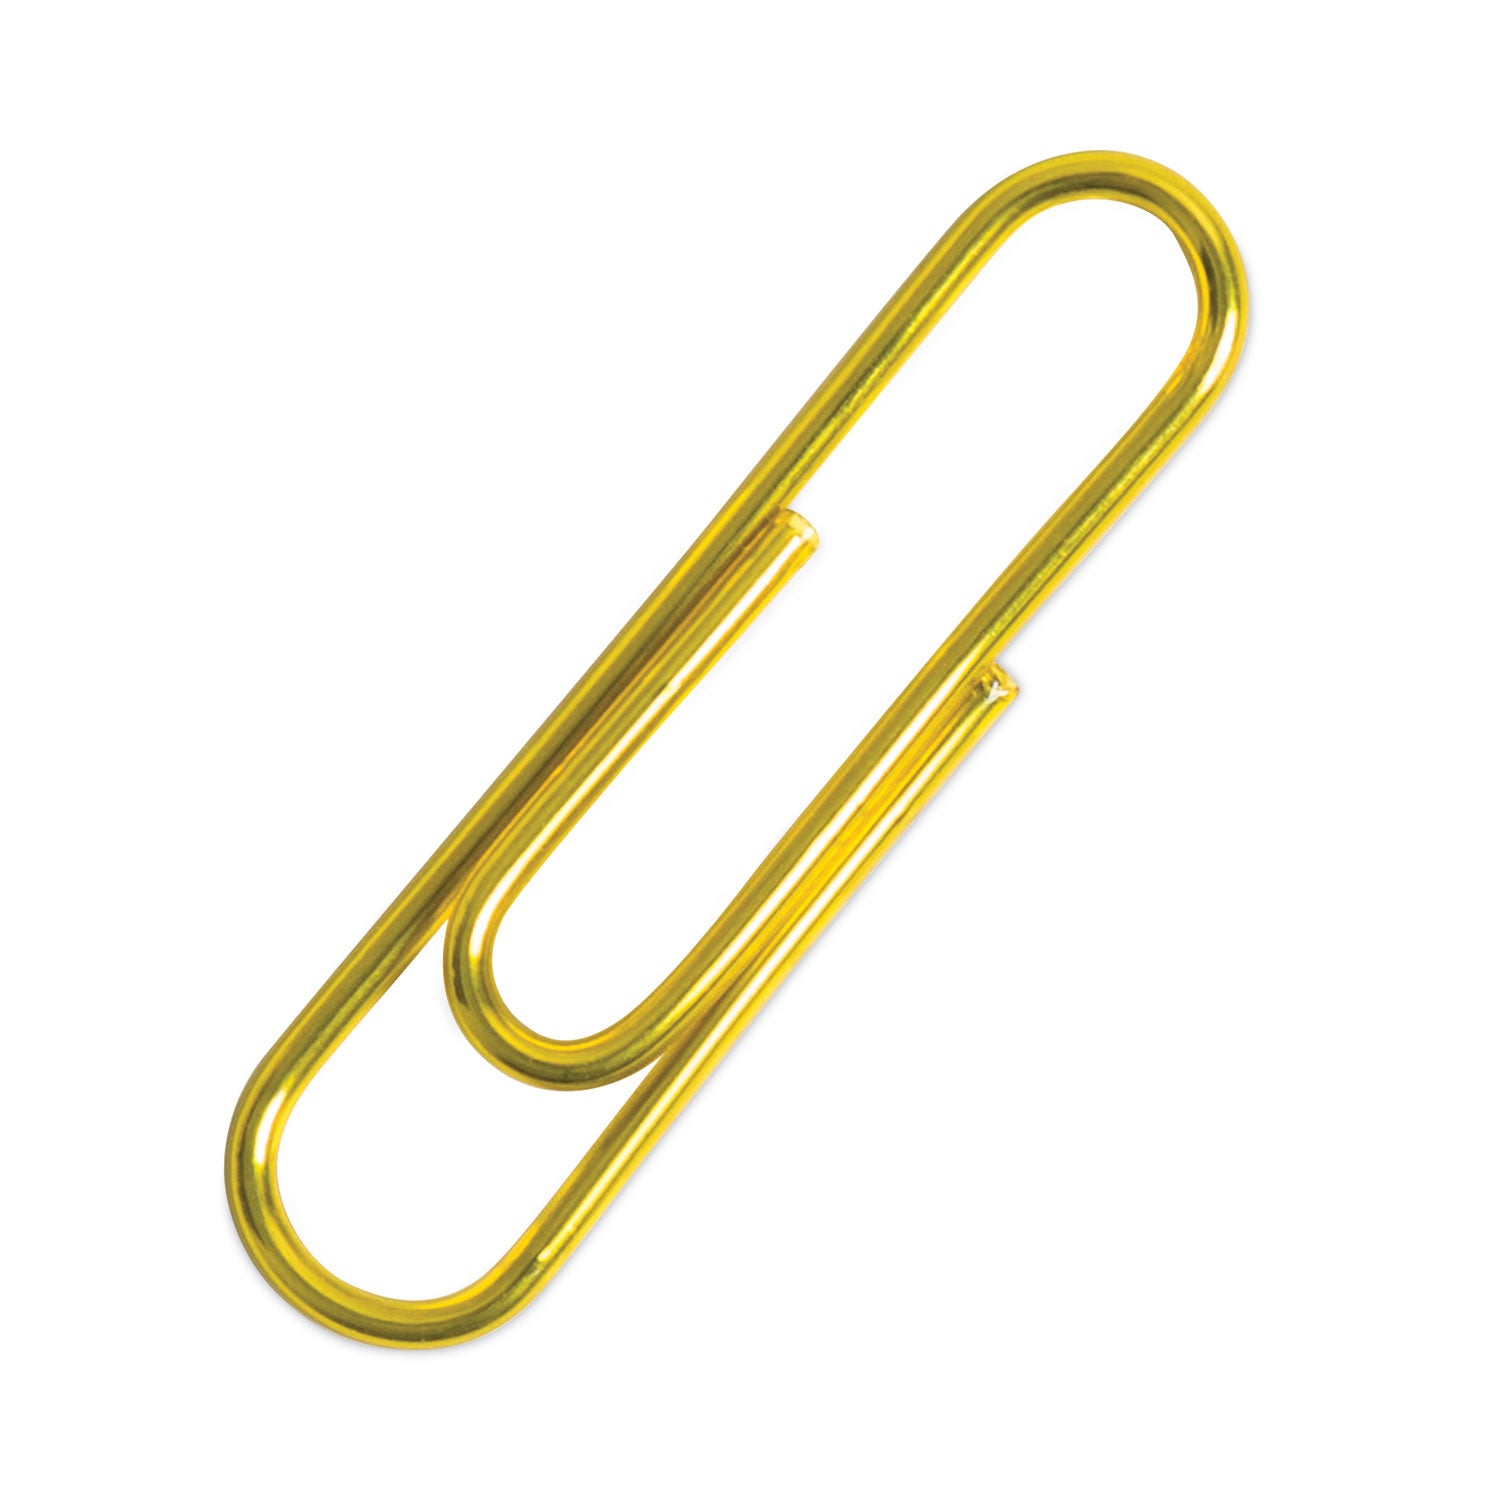 paper-clips-medium-vinyl-coated-gold-200-clips-box-5-boxes-pack_ubr3619u0624 - 1